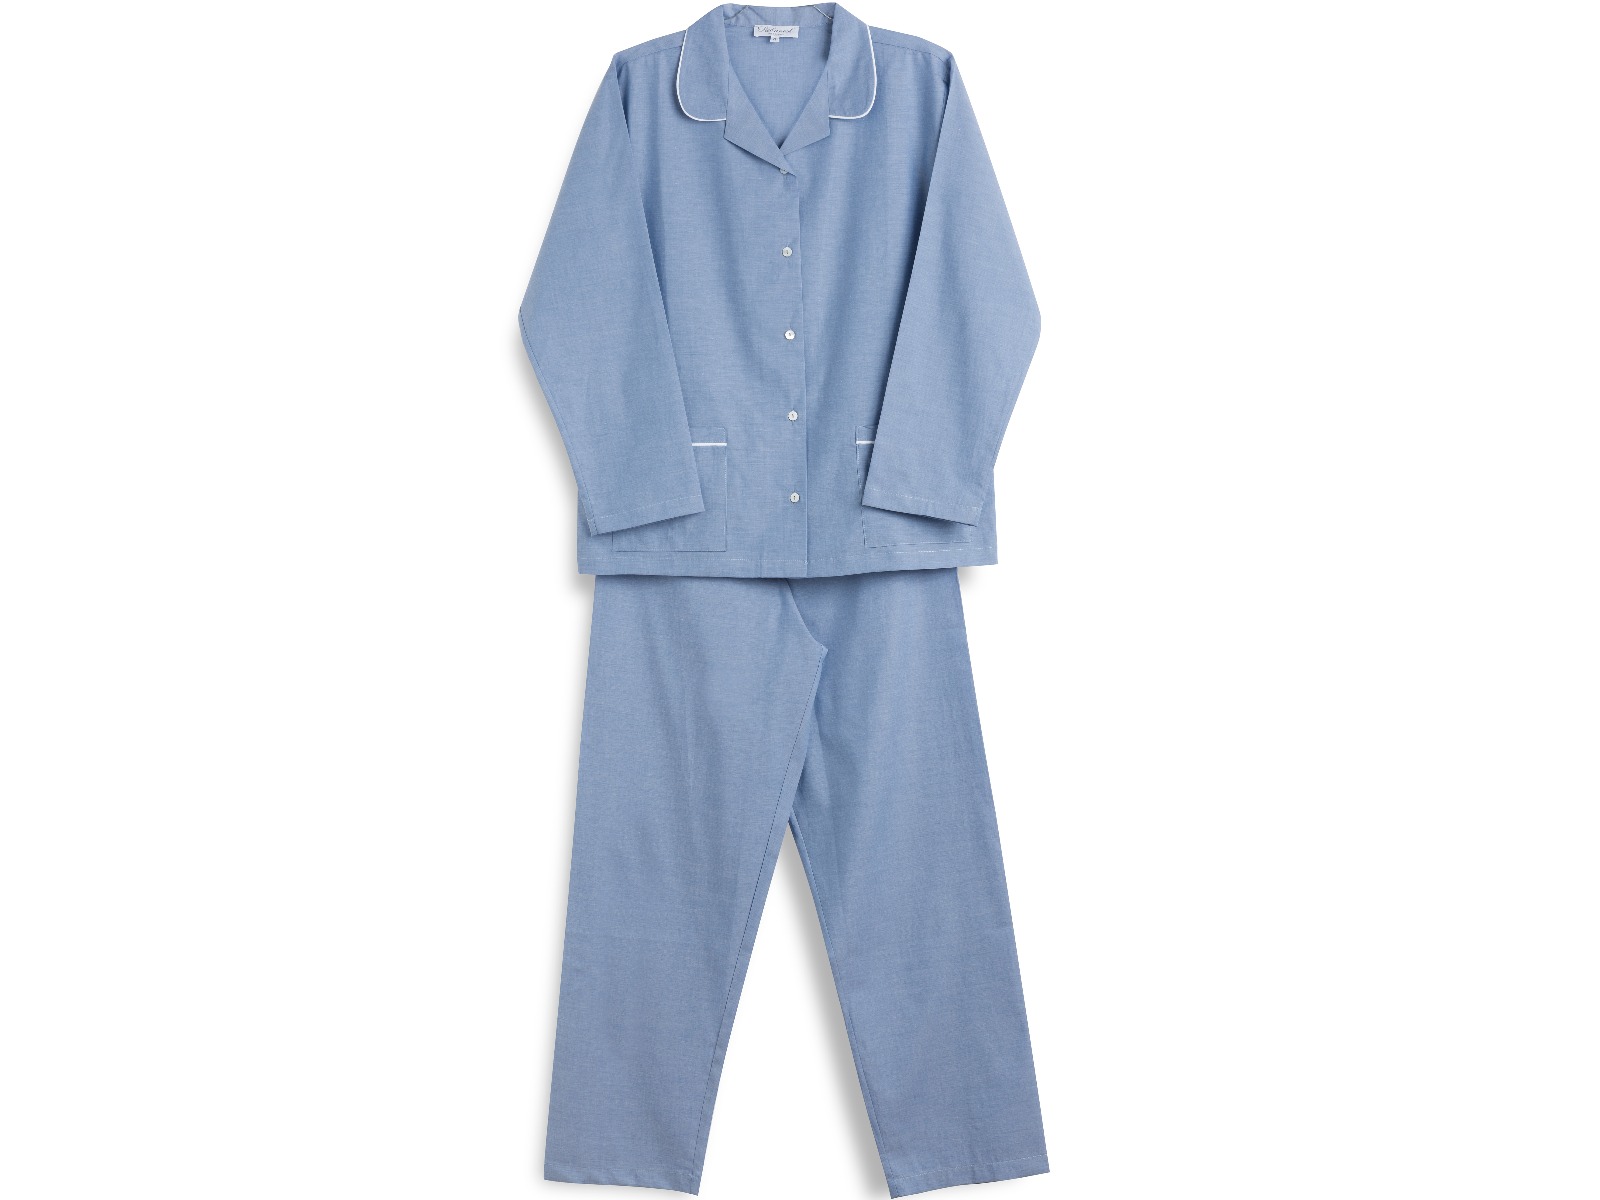 Siebaneck, i pigiami artigianali italiani: - Donna - mod. 1 bis Donna azzurro jeans 